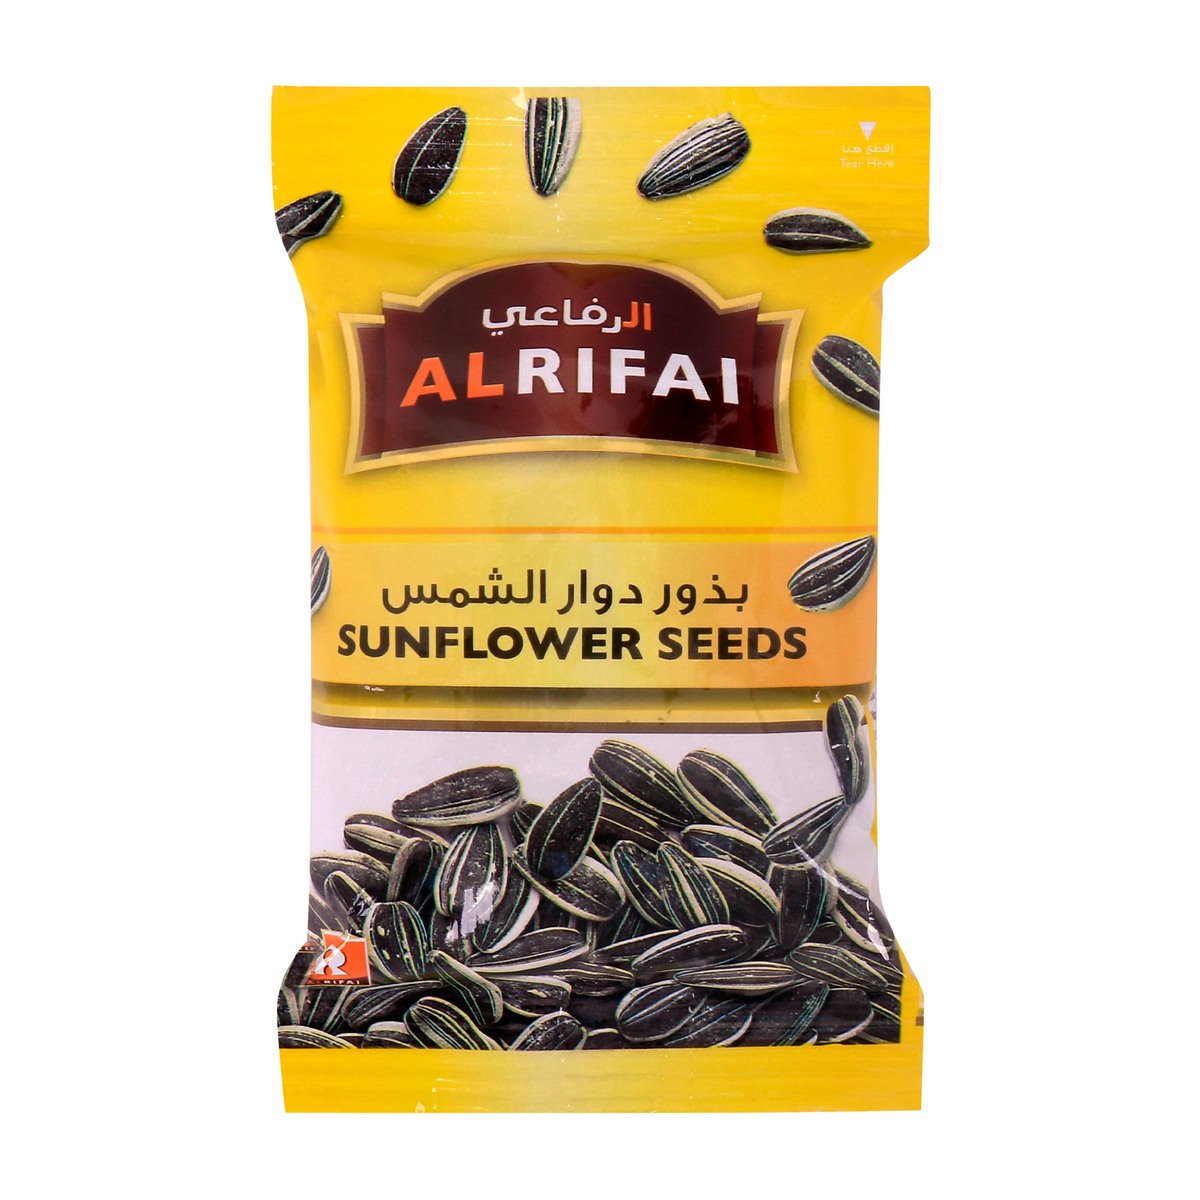 Al Rifai Sunflower Seeds 20g